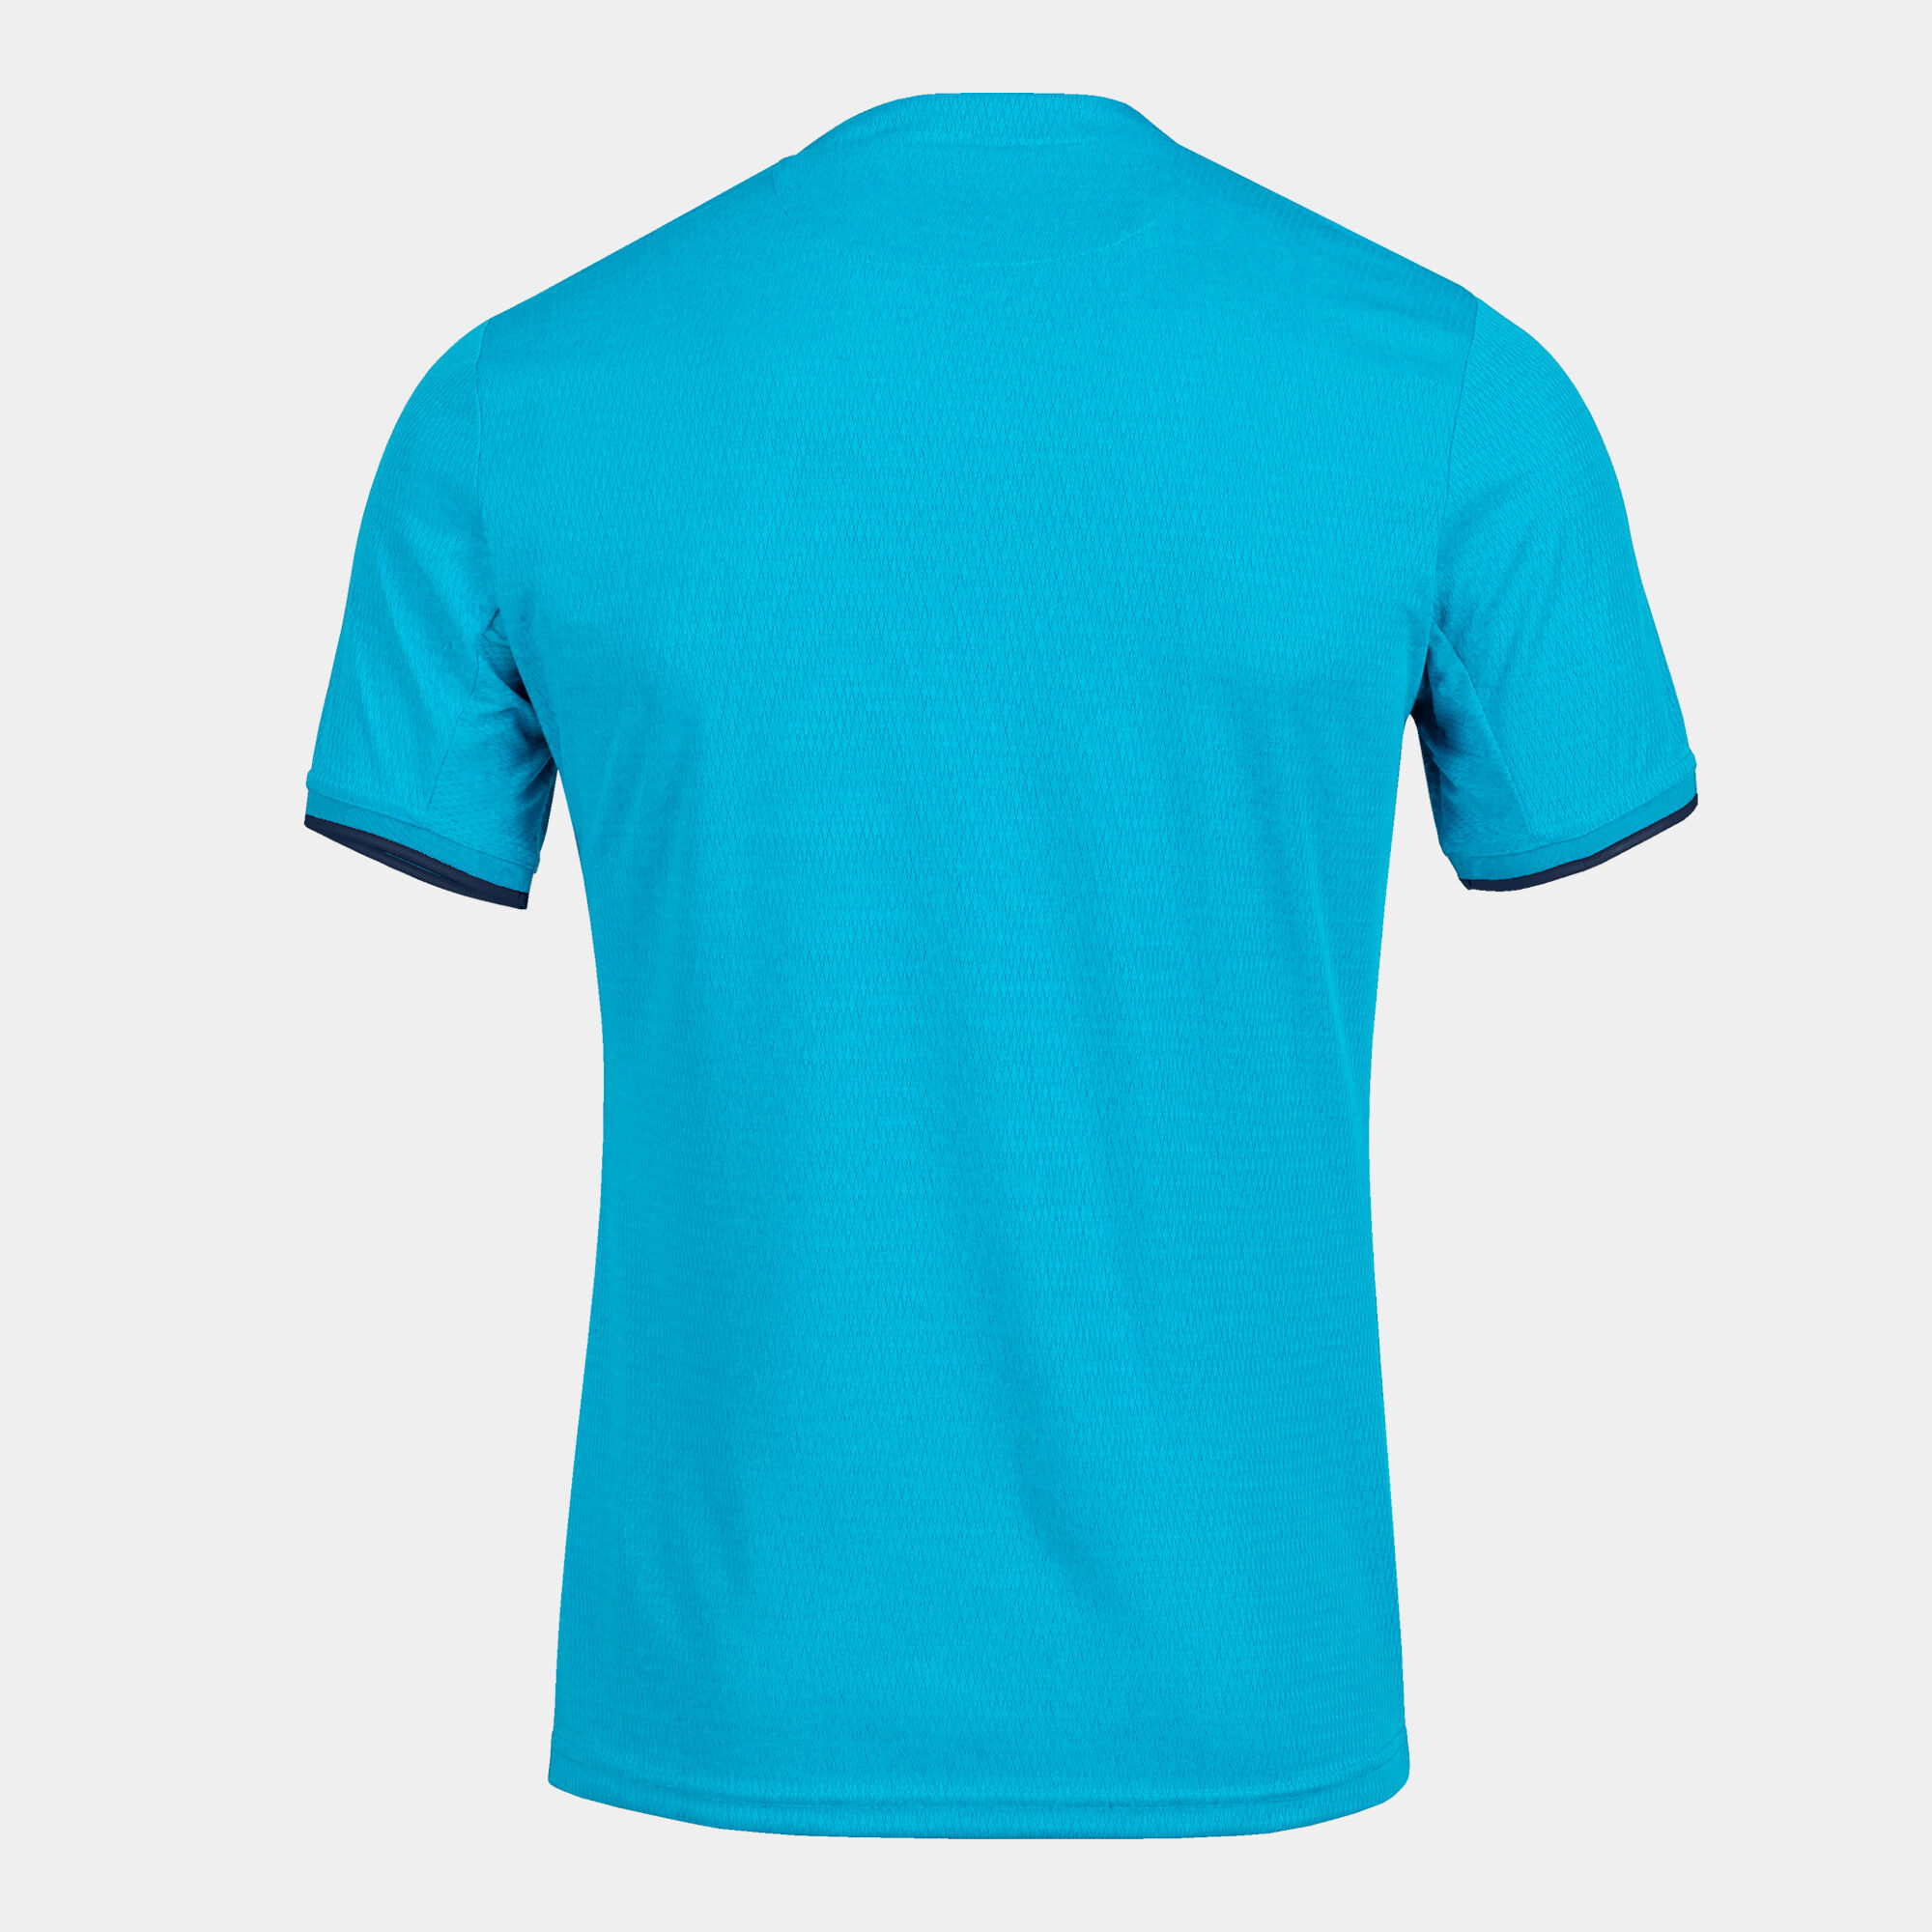 Camiseta manga corta hombre Toletum IV turquesa flúor marino